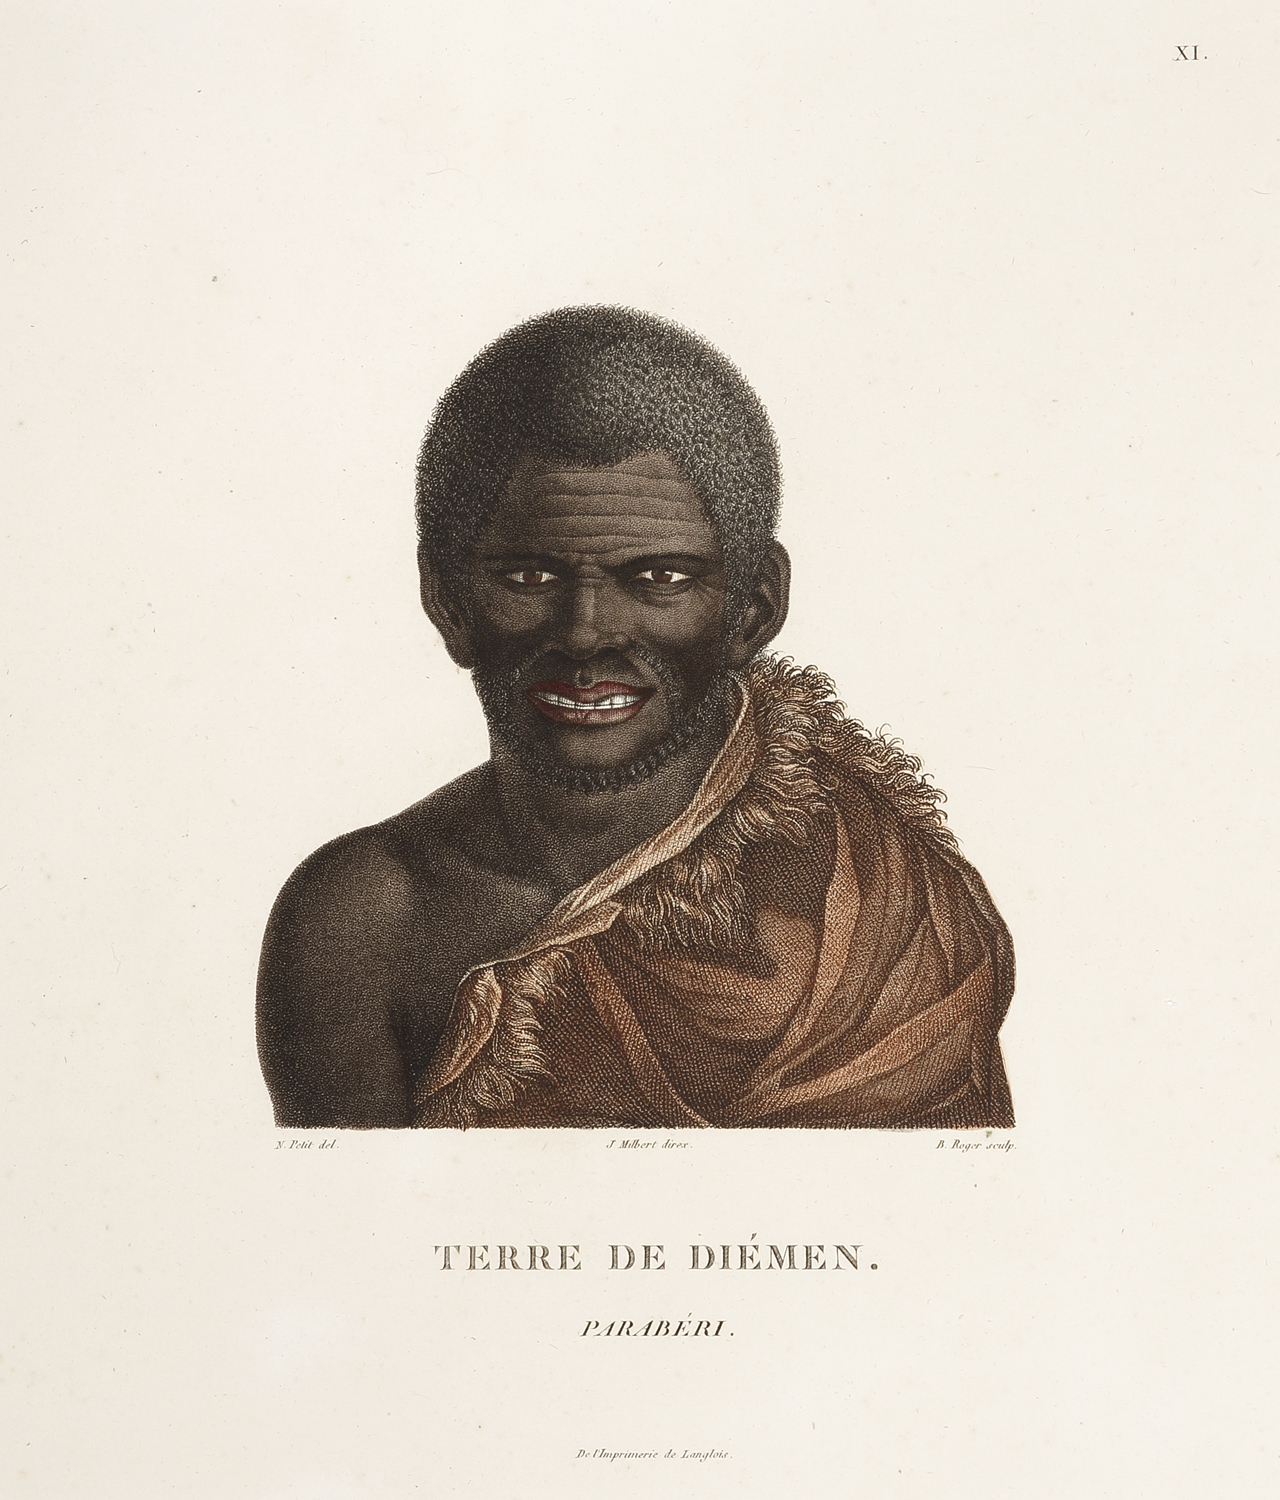 Terre De Diemen. Paraberi. - Antique Print from 1807